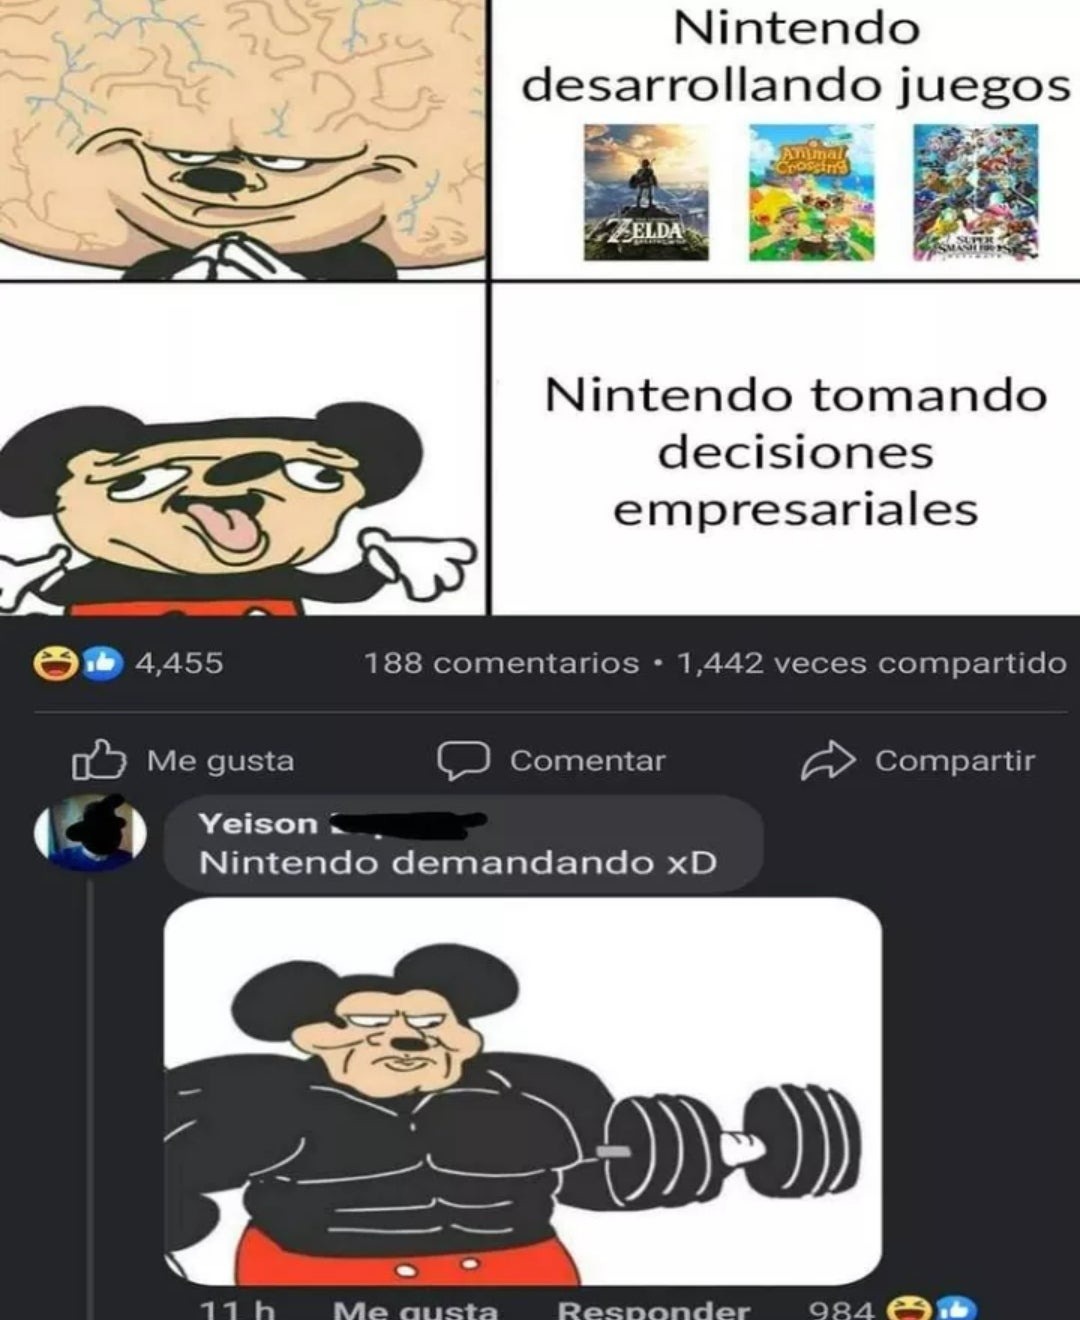 Nintendo demando mamadisimo - meme